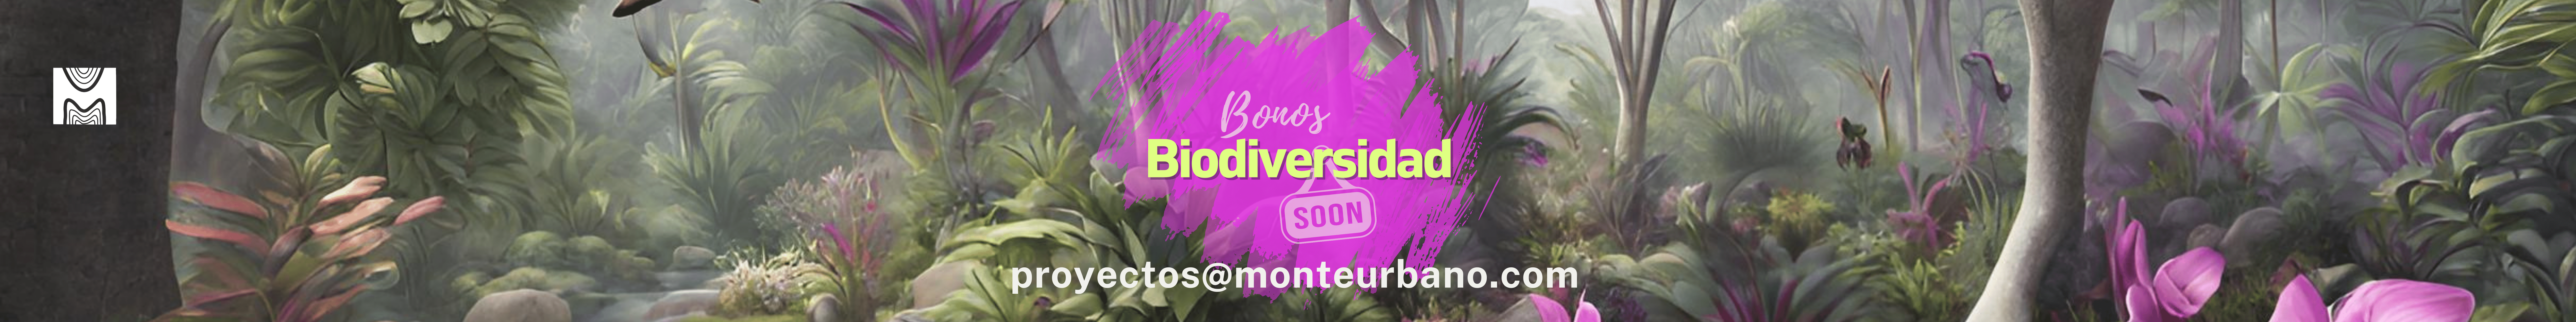 Bonos de biodiversidad urbana - Monte Urbano